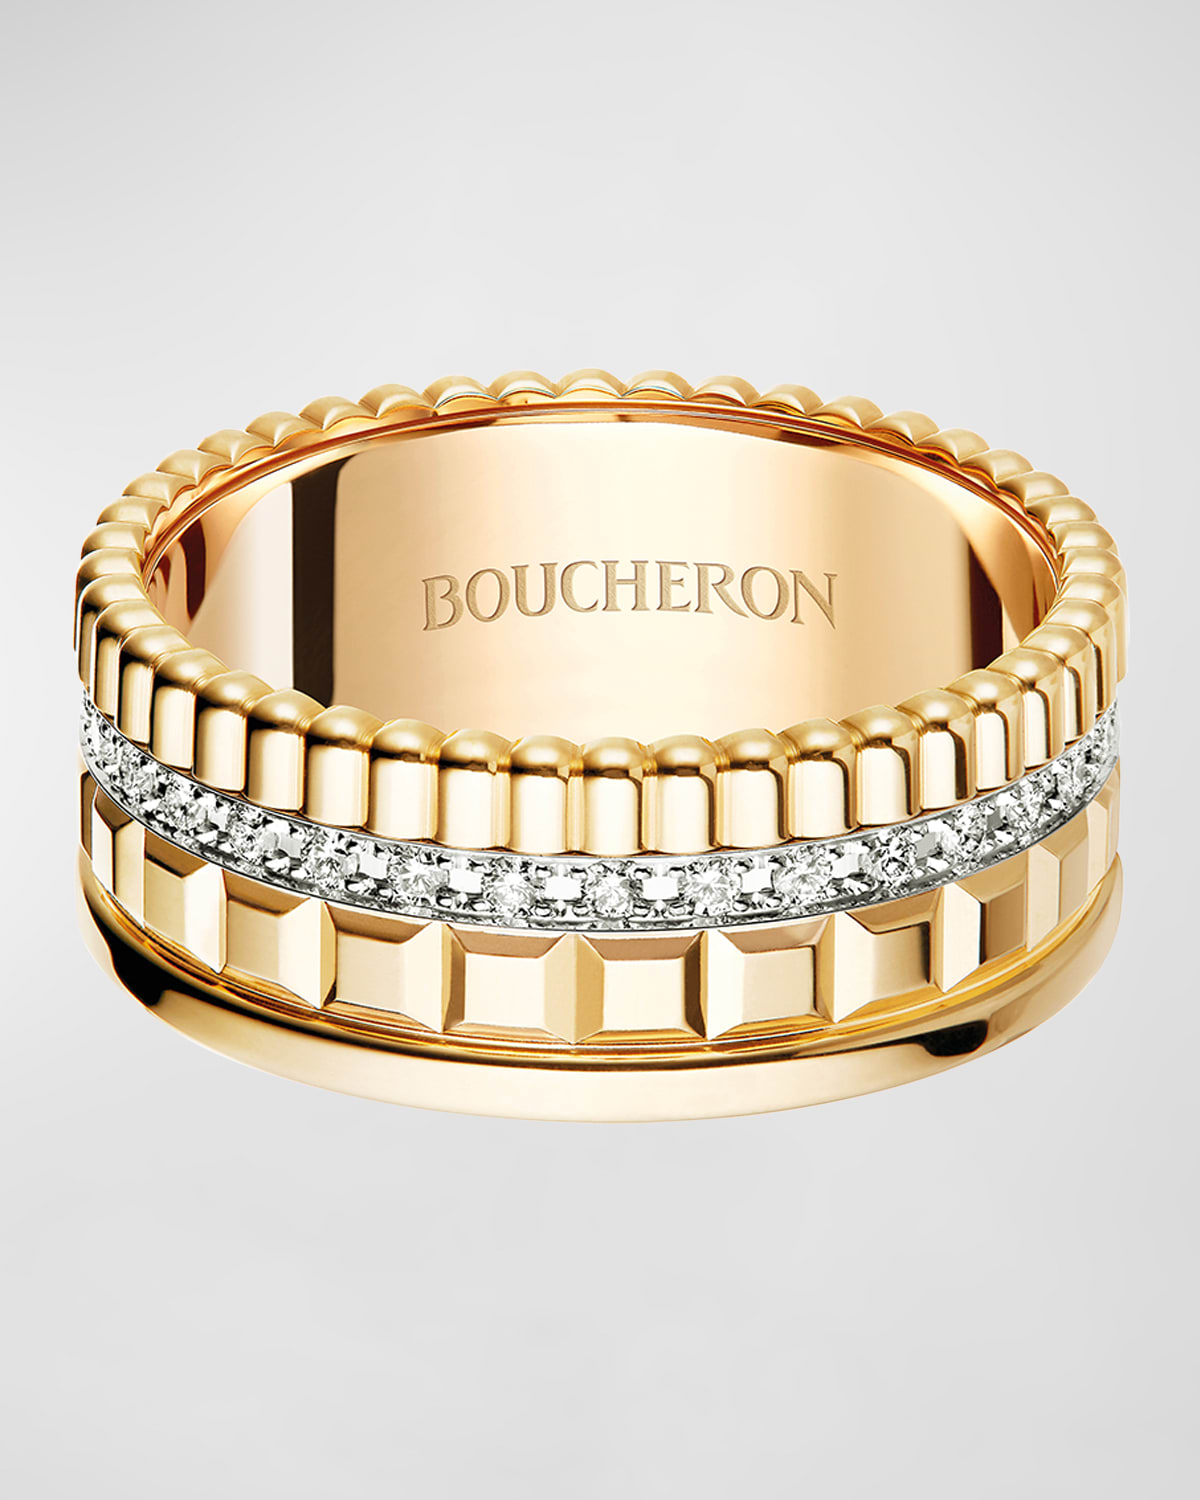 Boucheron Quatre Radiant 18k Gold Band Ring with Diamonds, Size 52